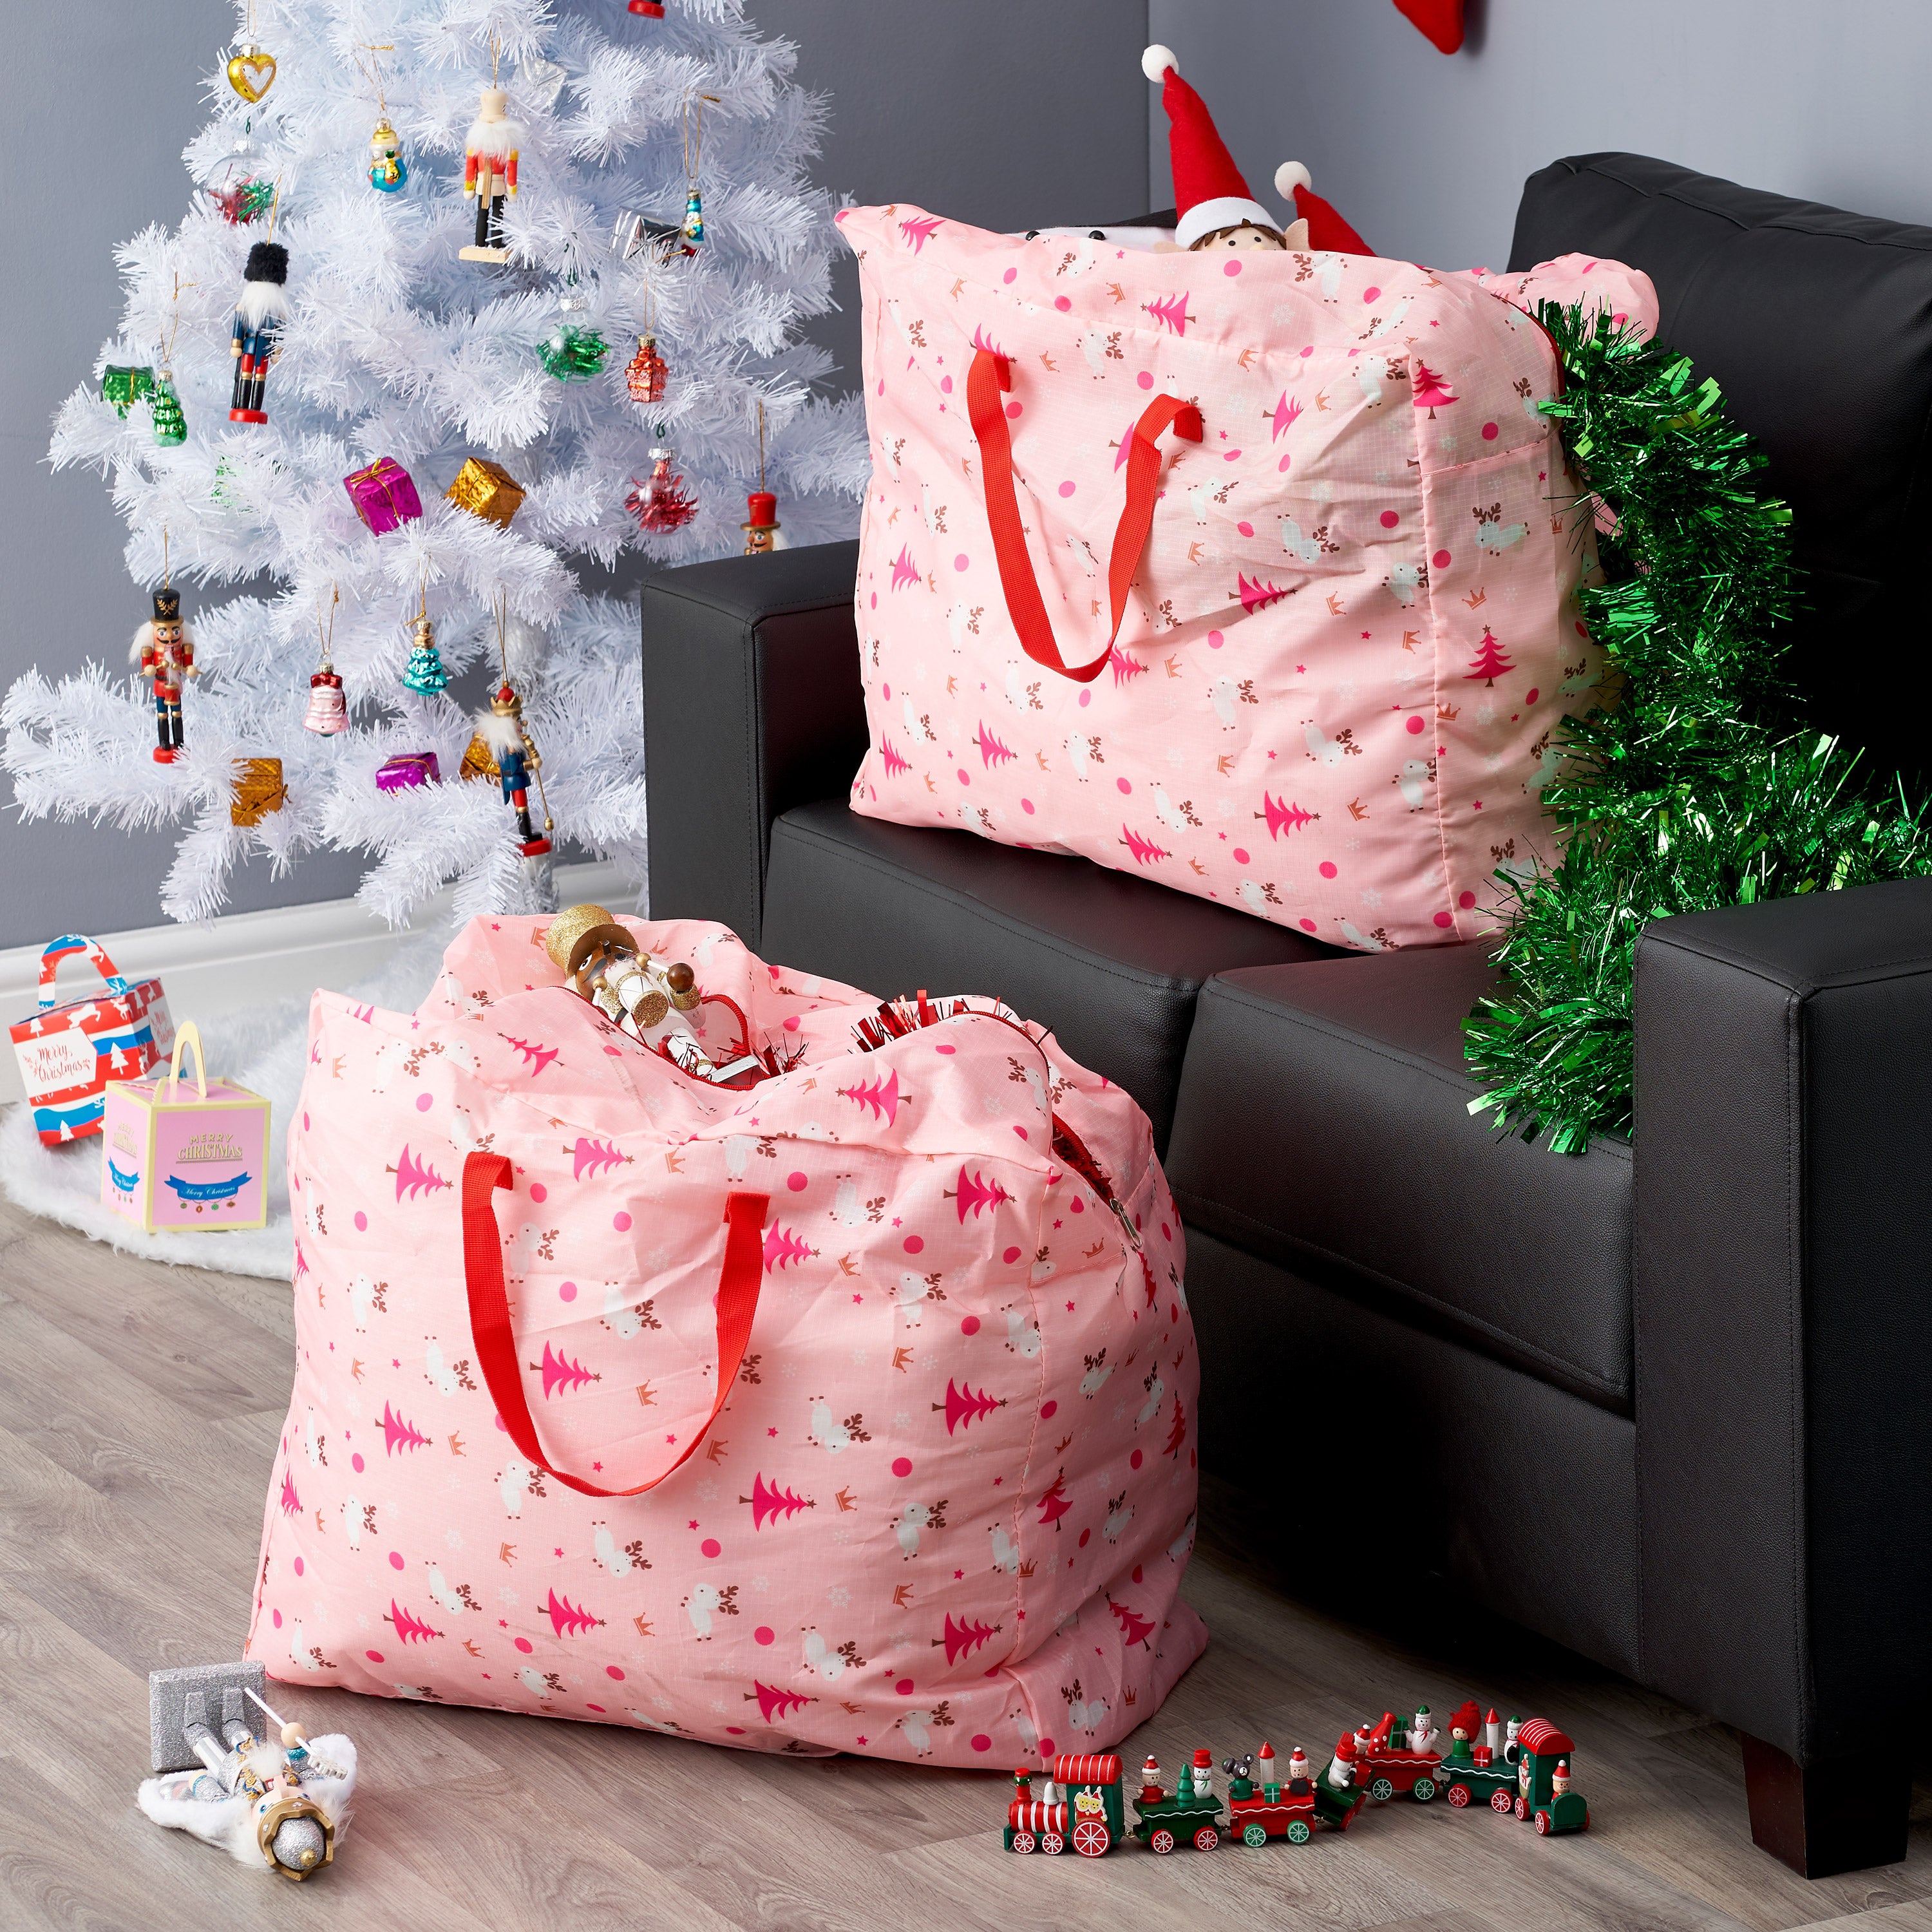 2 Christmas Themed Storage Bags